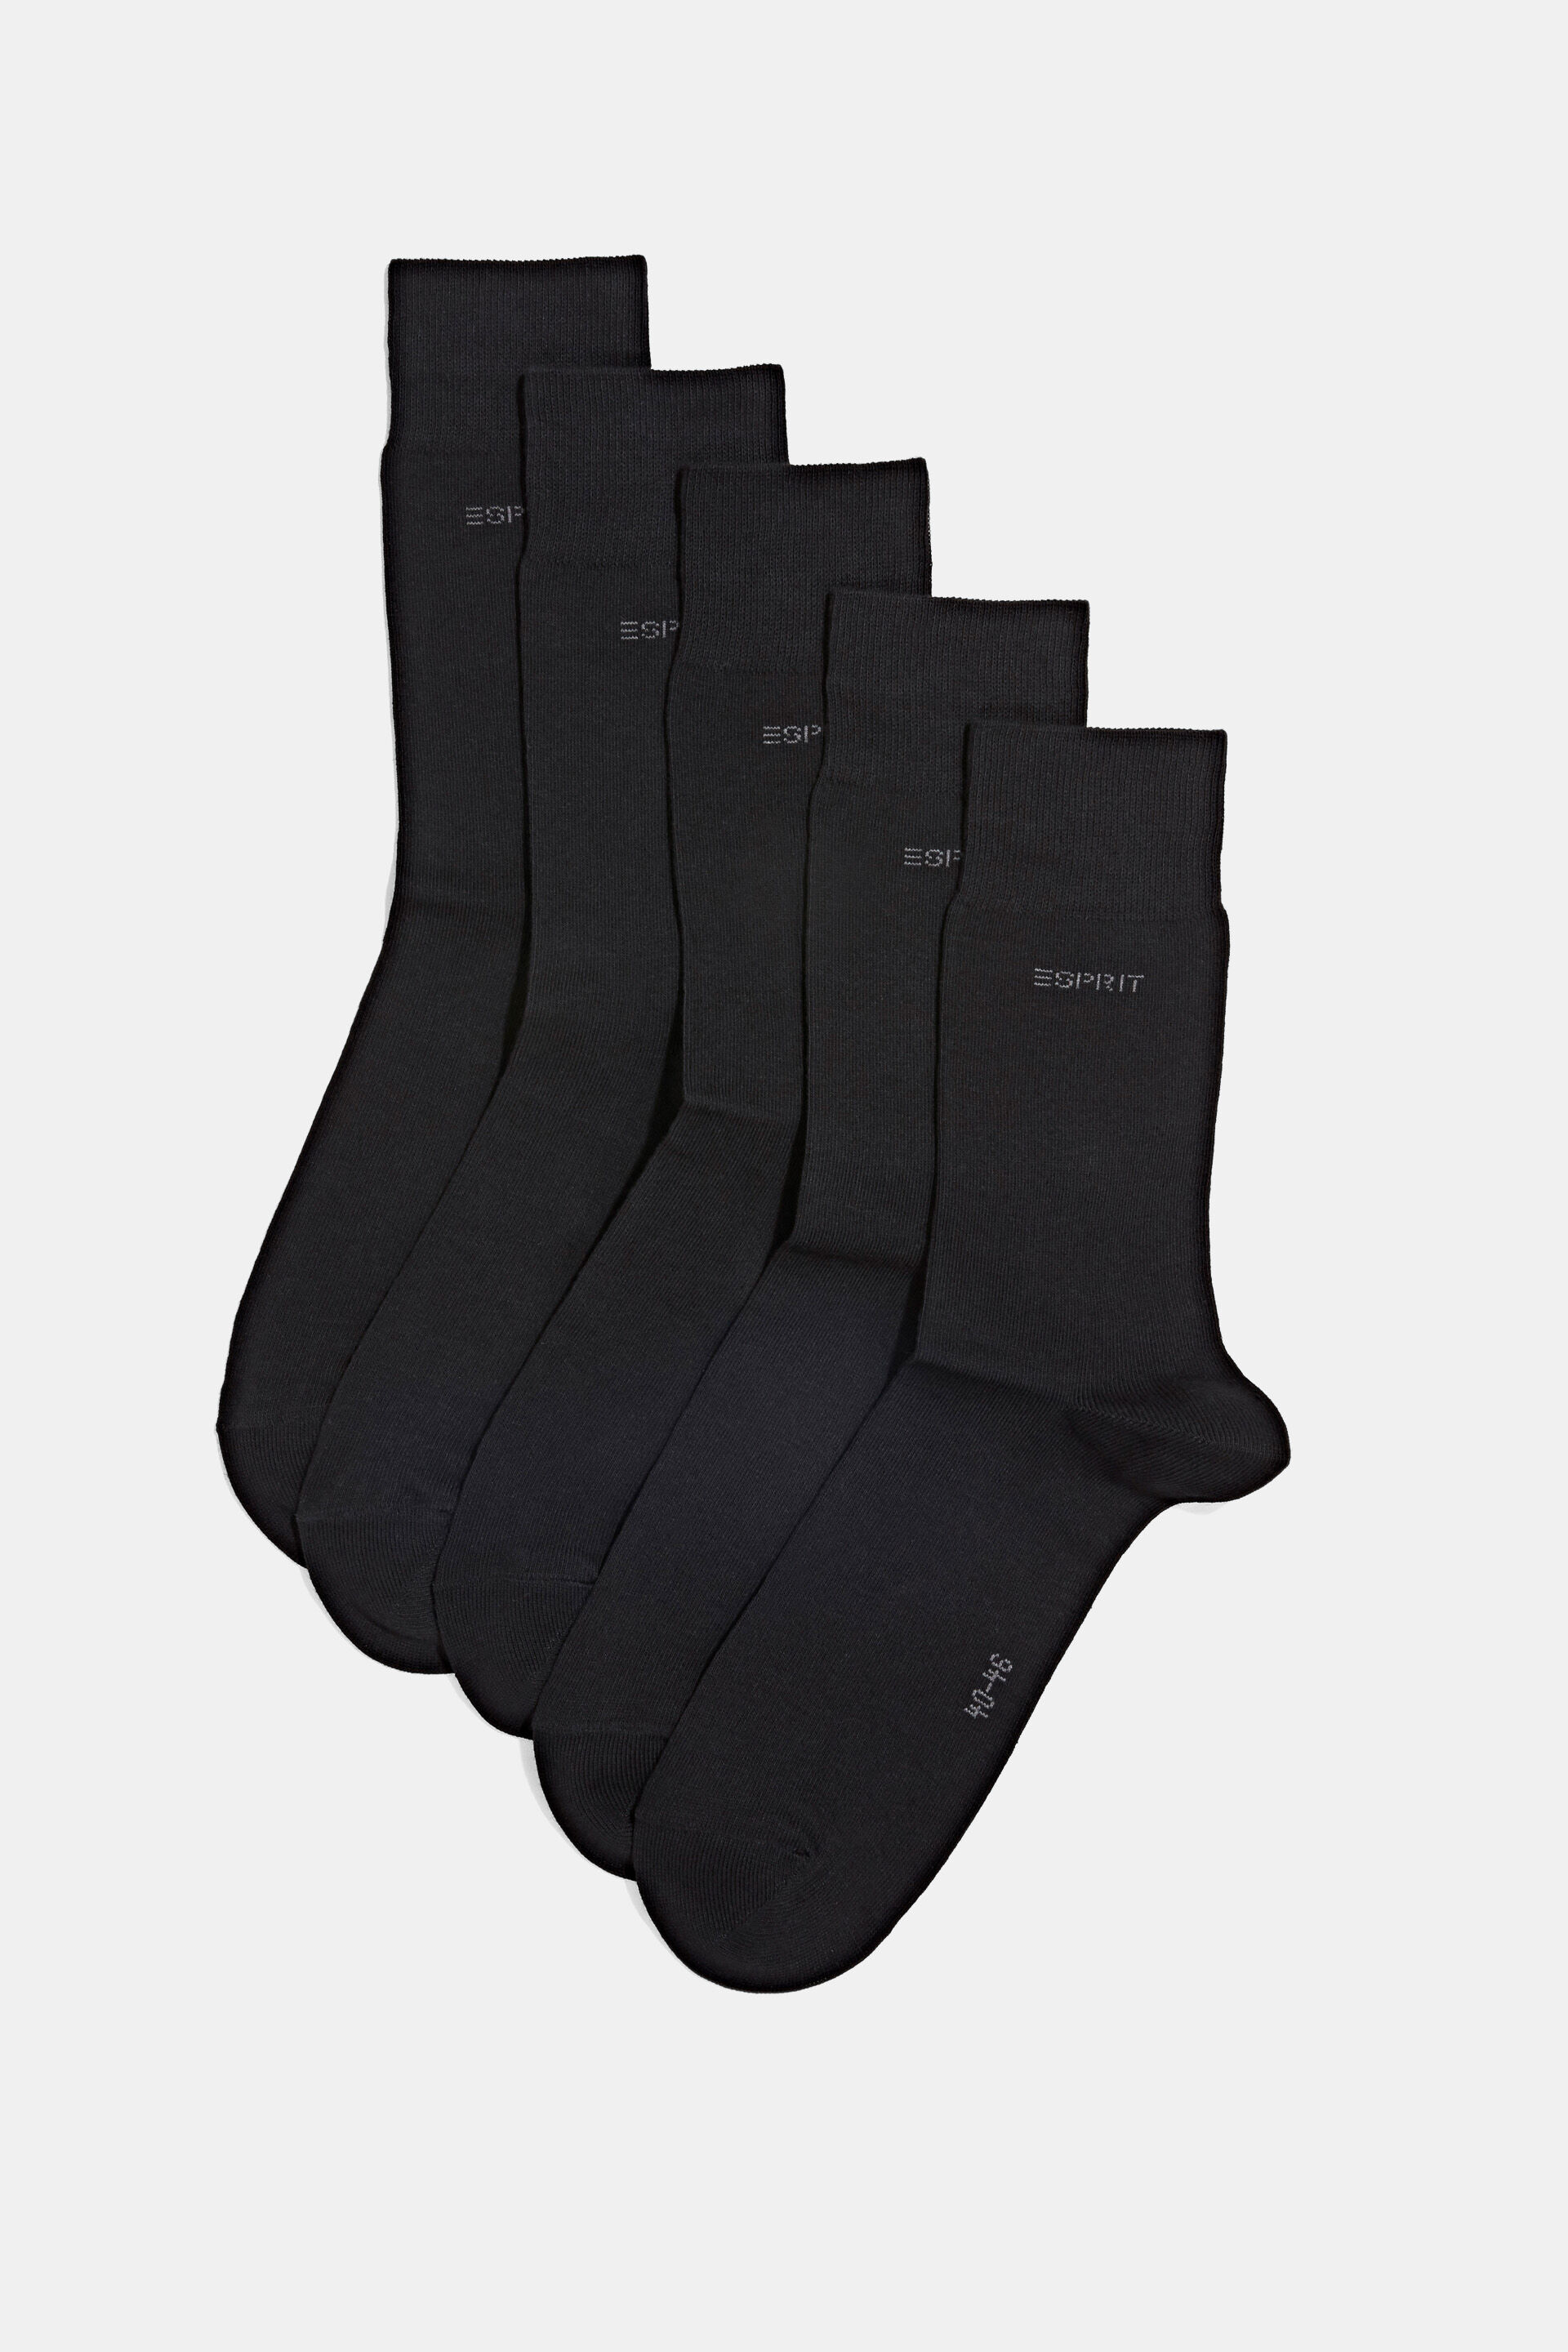 Esprit socks, cotton organic blended of Pack 5